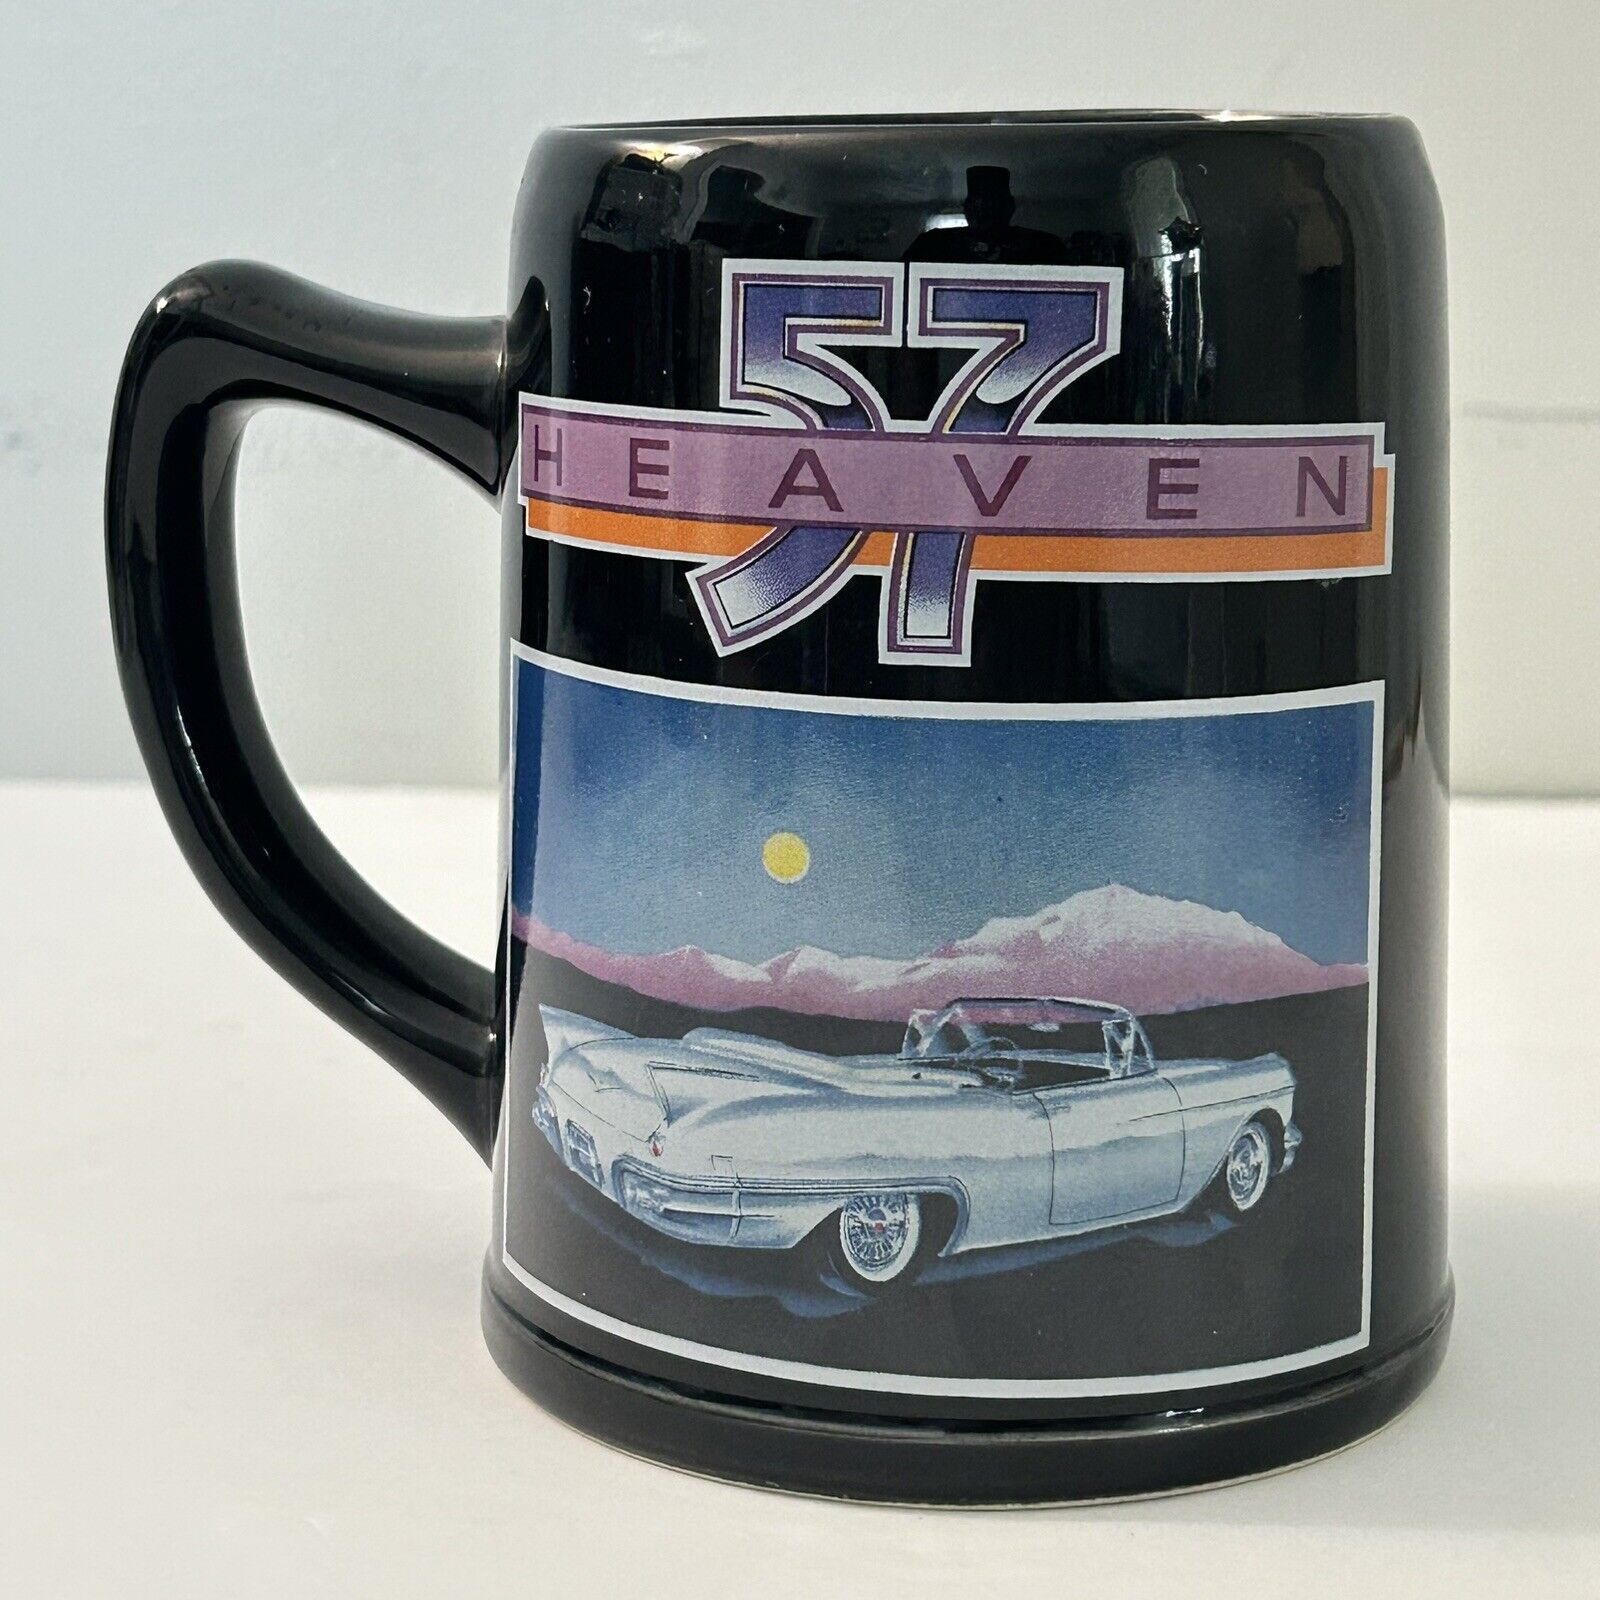 Vintage 57 Heaven Coffee Mug (1986)